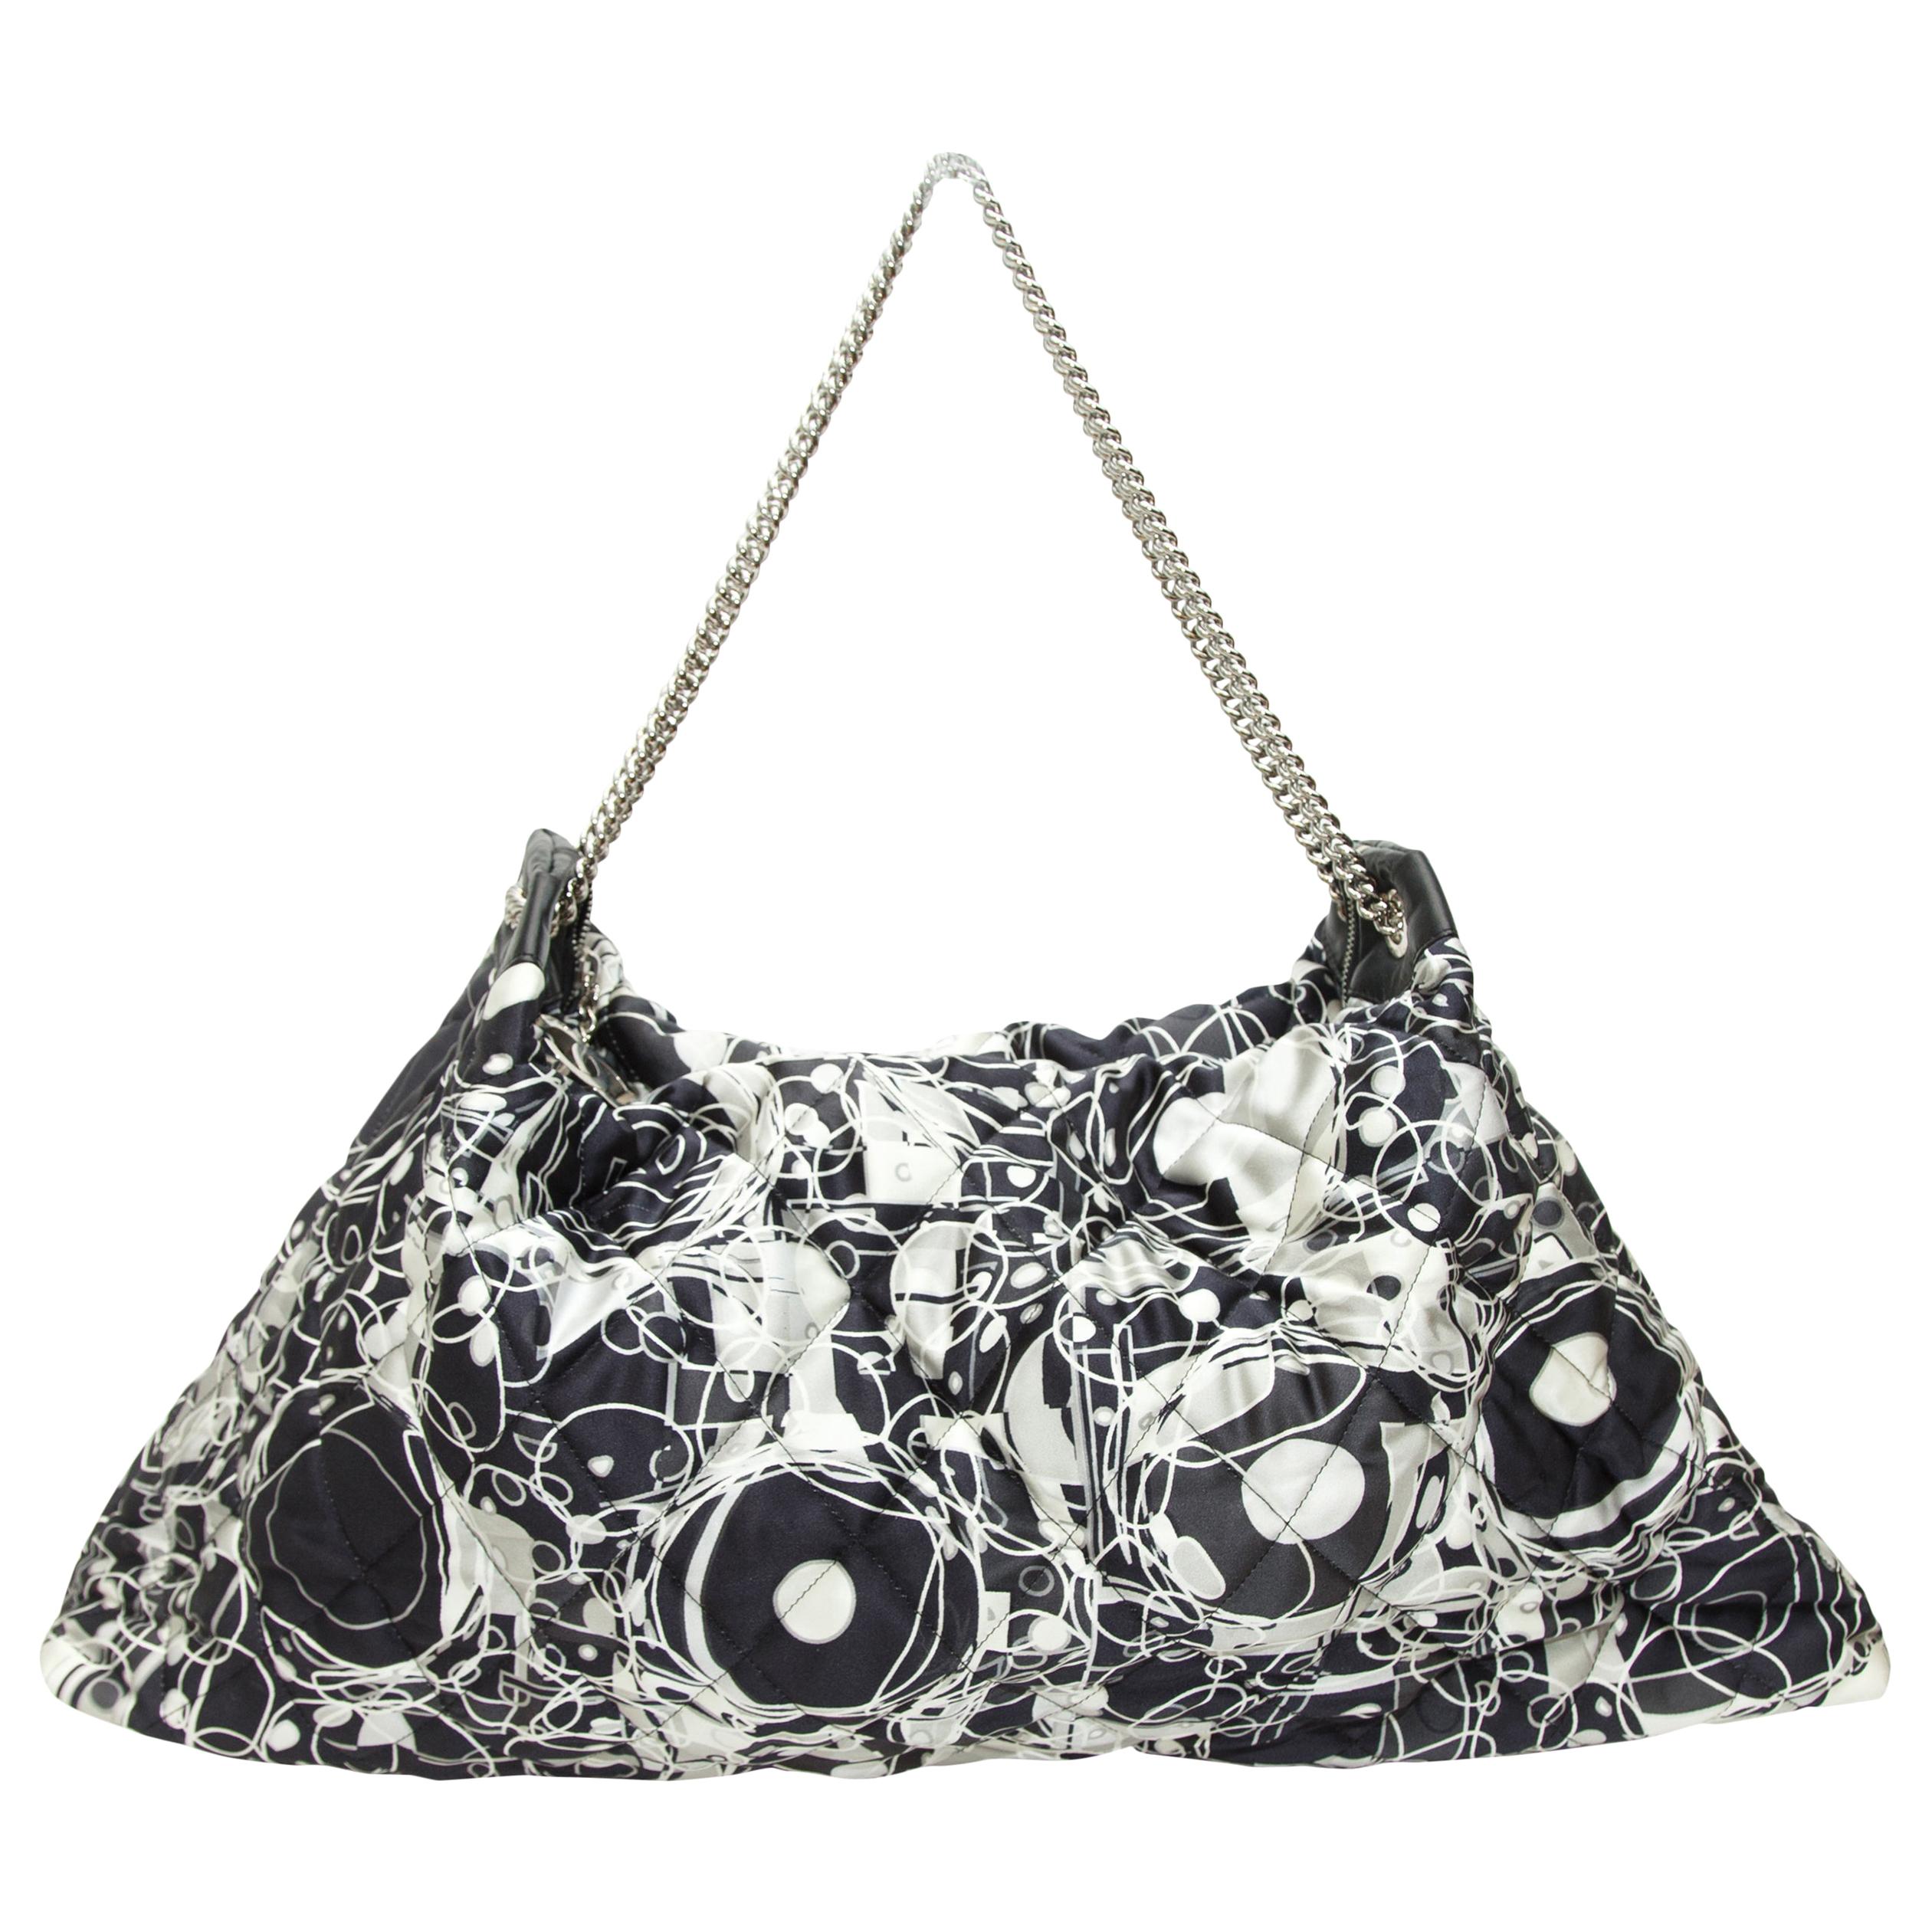  Chanel Black & White Spring 2008 Abstract Print Handbag